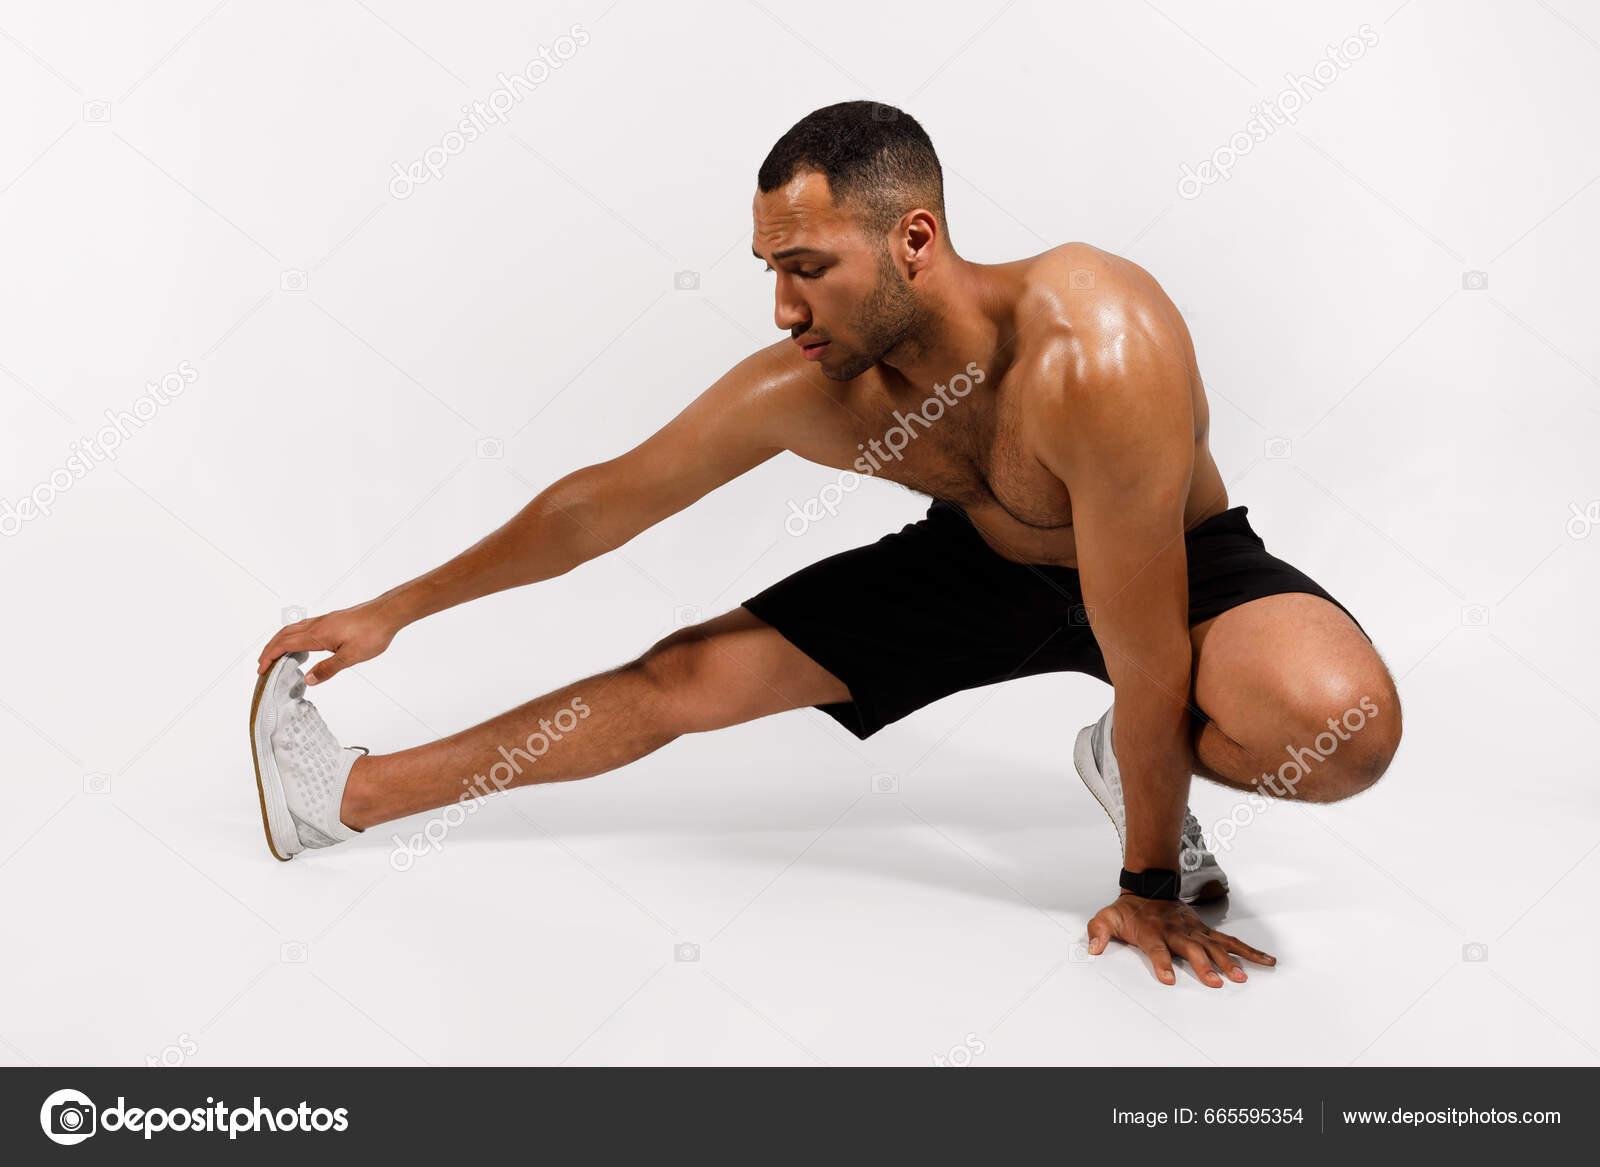 https://st5.depositphotos.com/4218696/66559/i/1600/depositphotos_665595354-stock-photo-fitness-workout-athletic-african-american.jpg